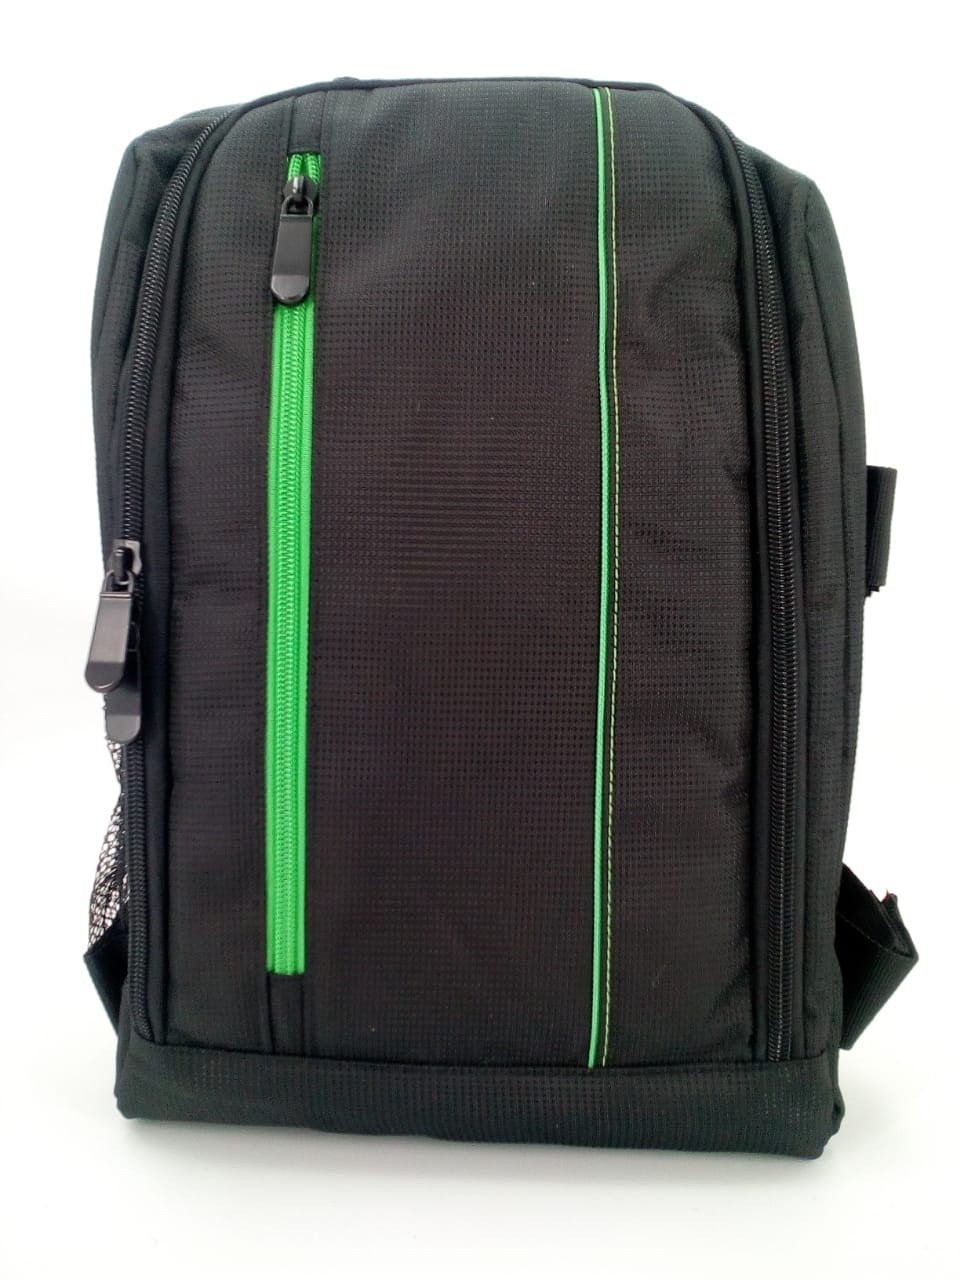 WP 01 mochila  reforzada para proteger cámara fotográfico verde